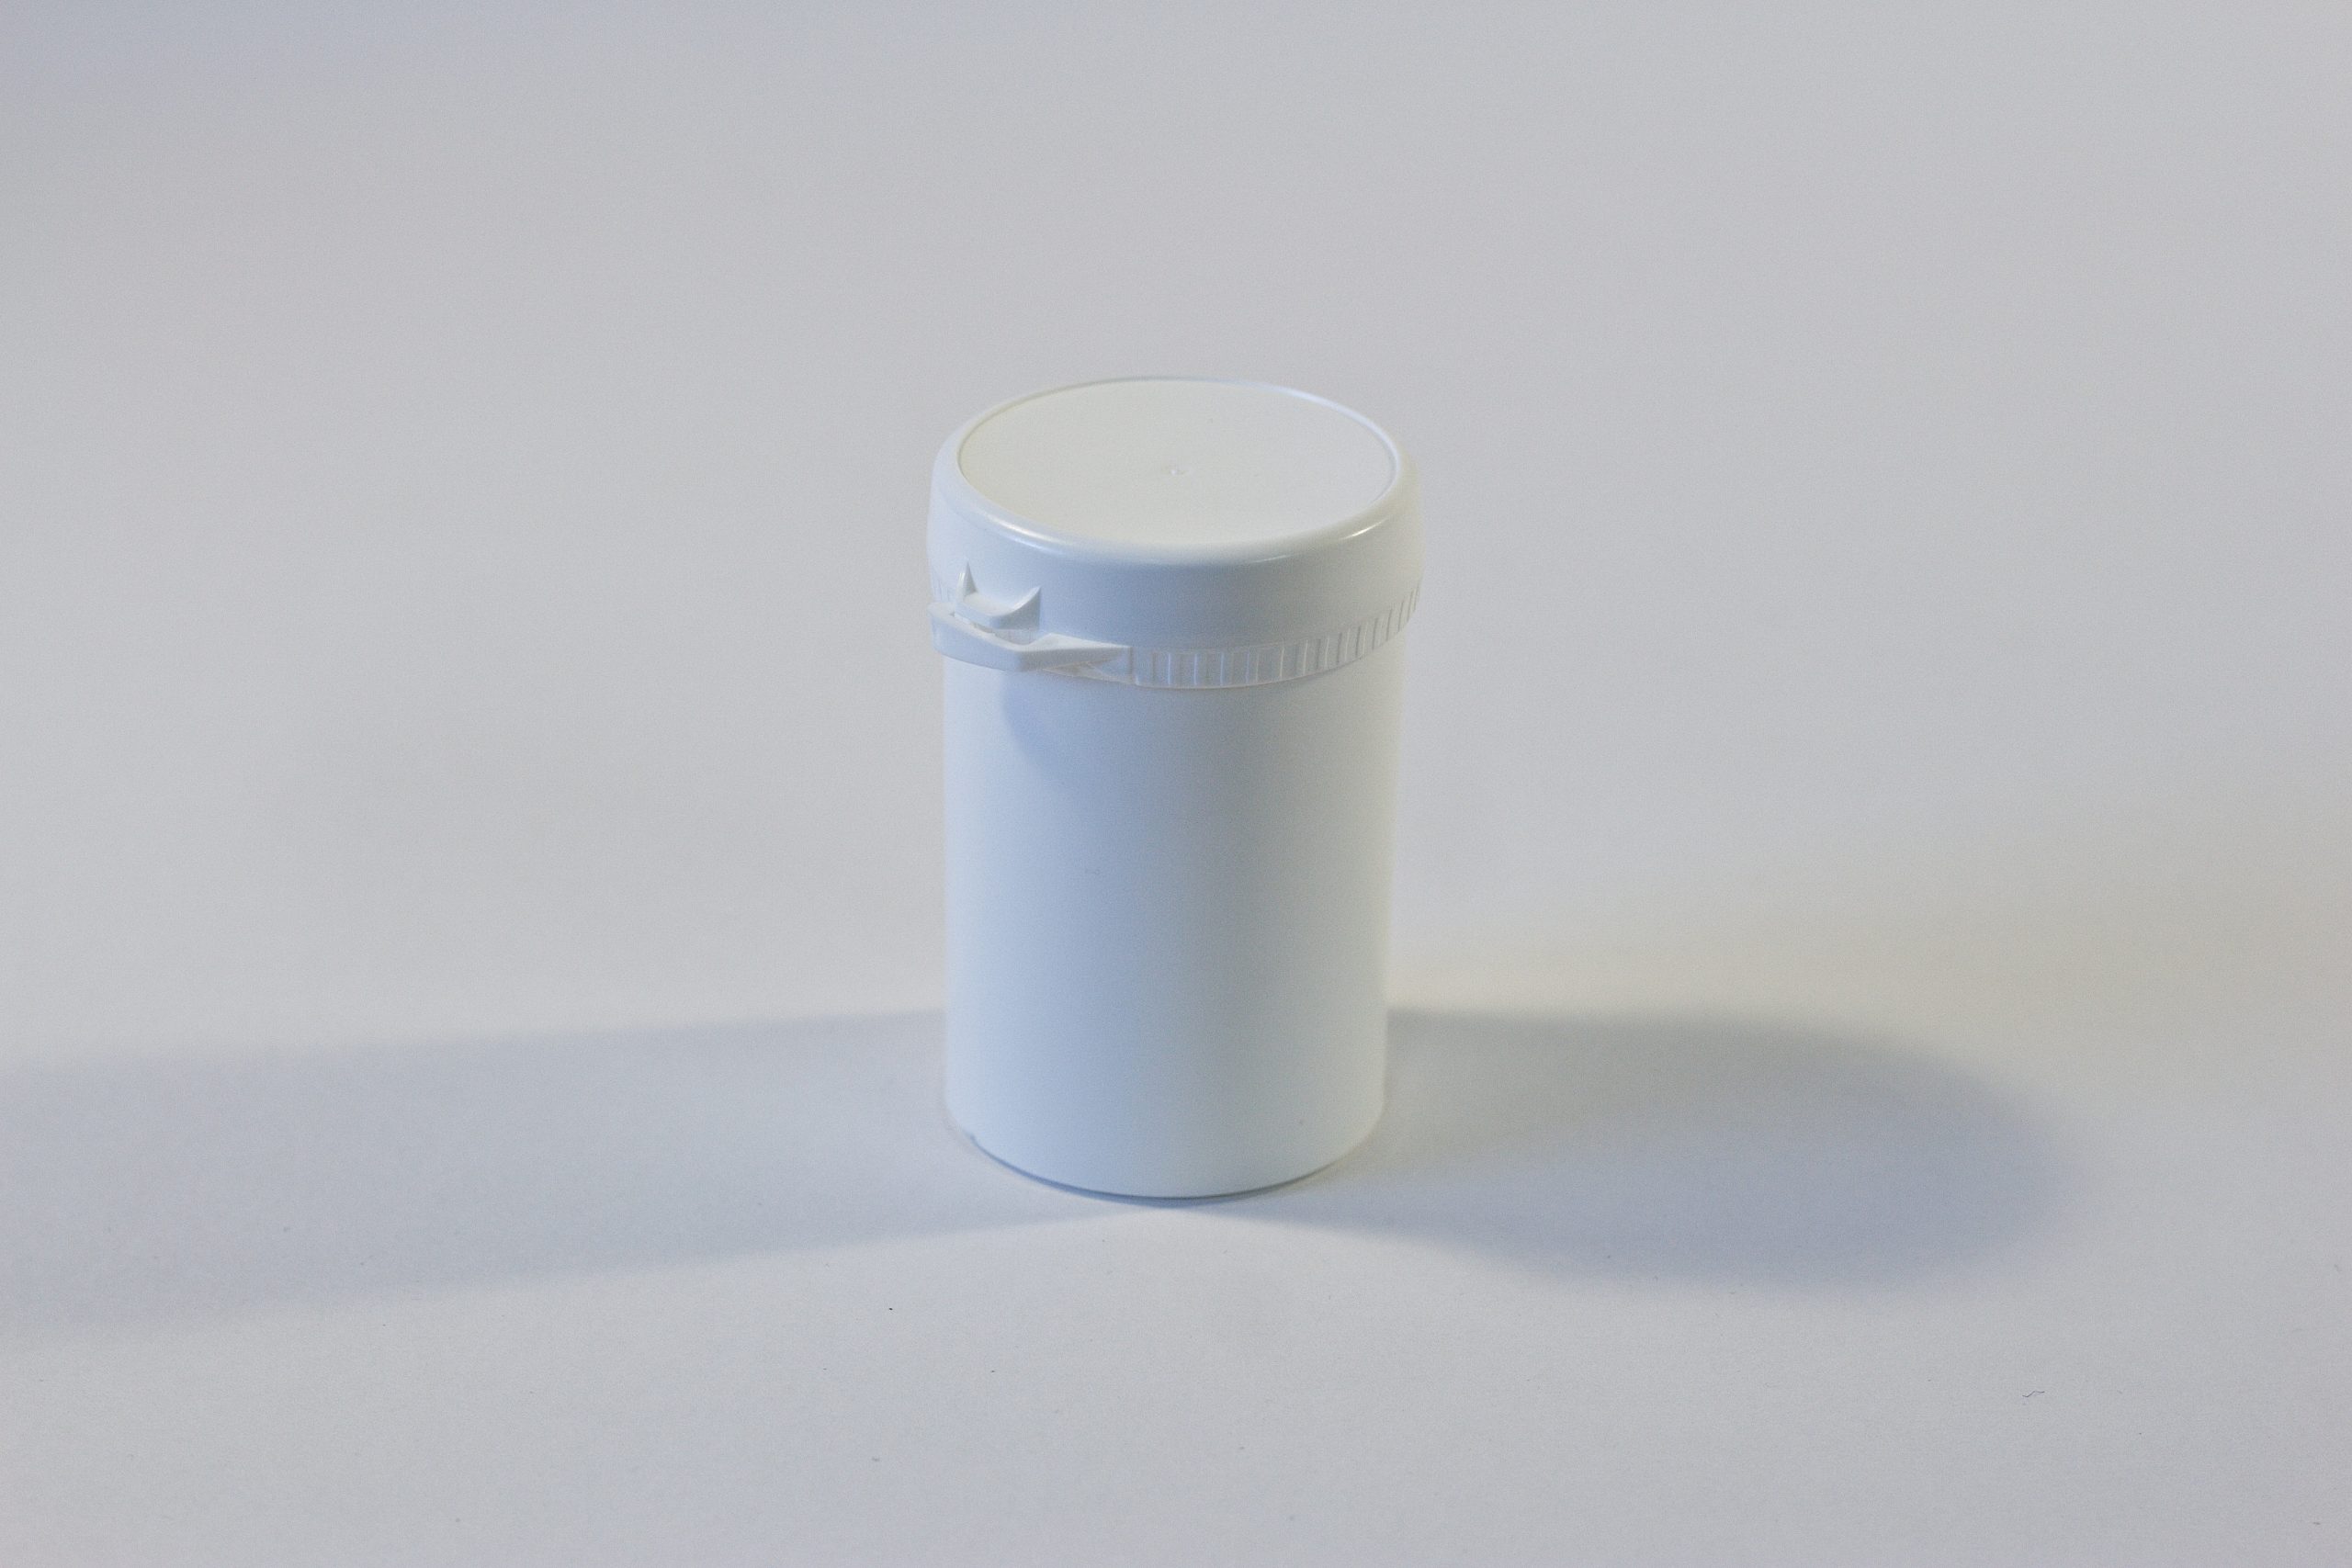 130ml White Snap Secure Jar WIth Tamper Evident Seal. Plastic Packaging Range